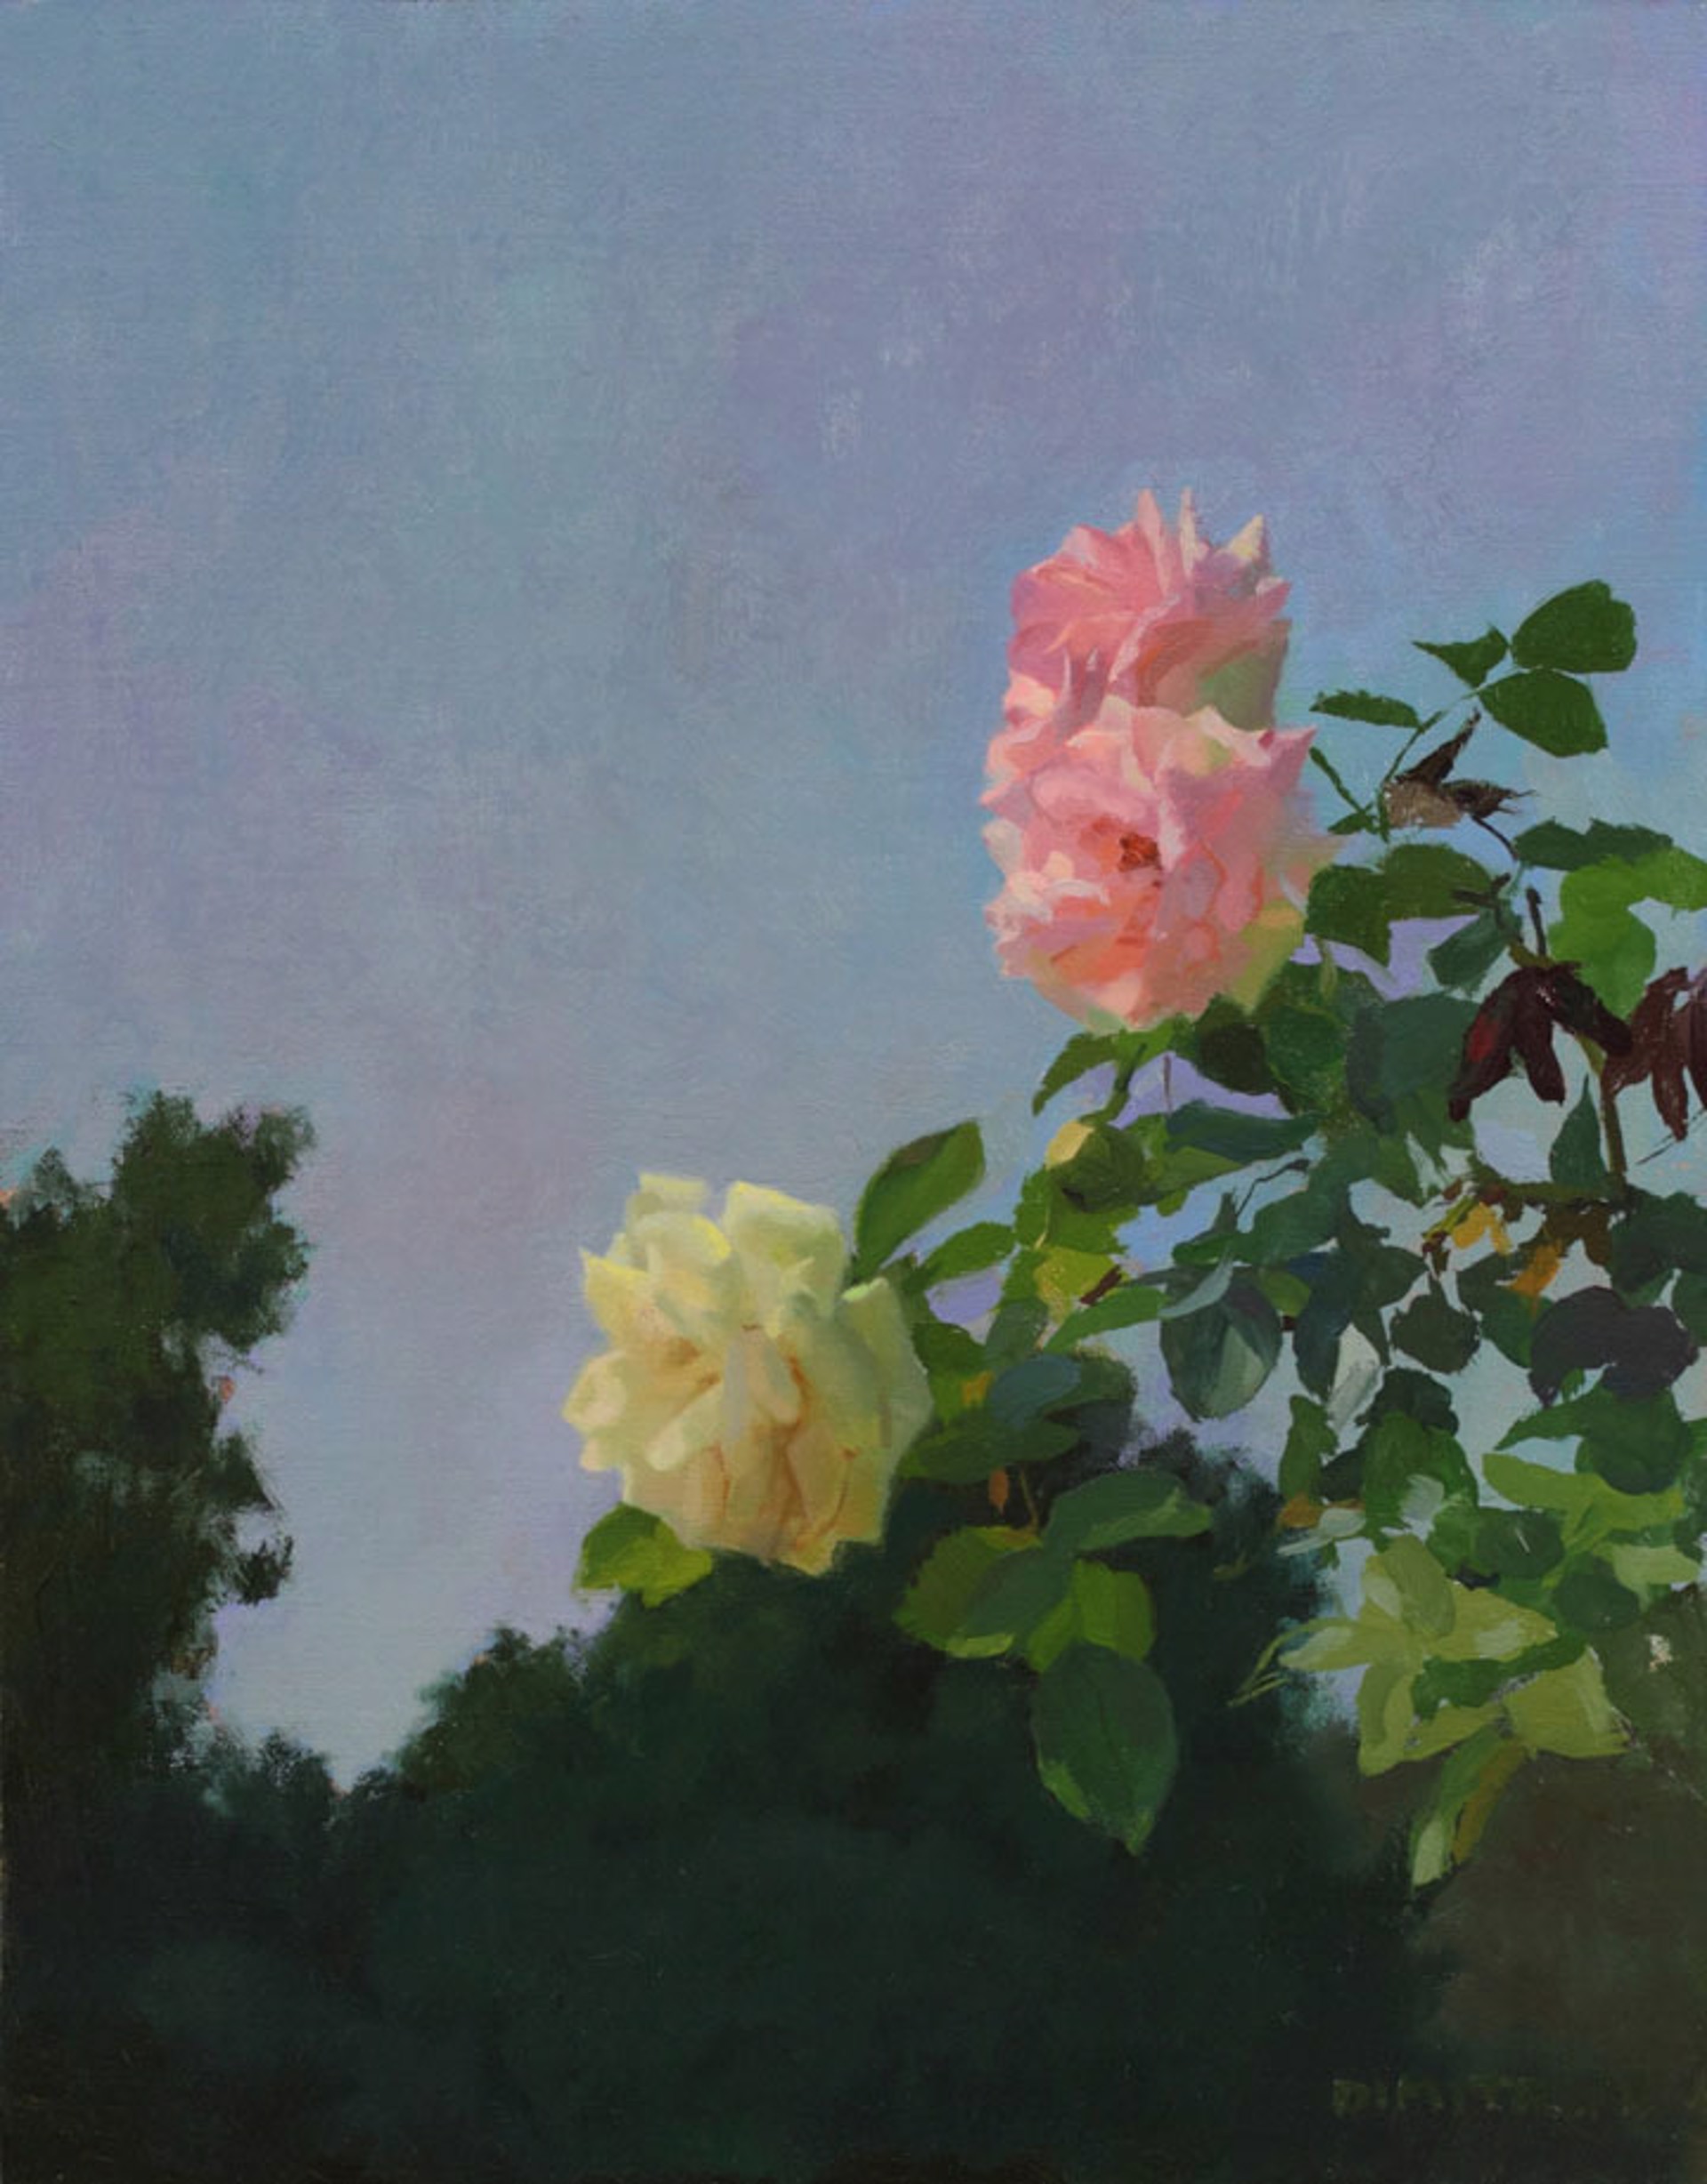 Sunlit Roses by Martin Dimitrov